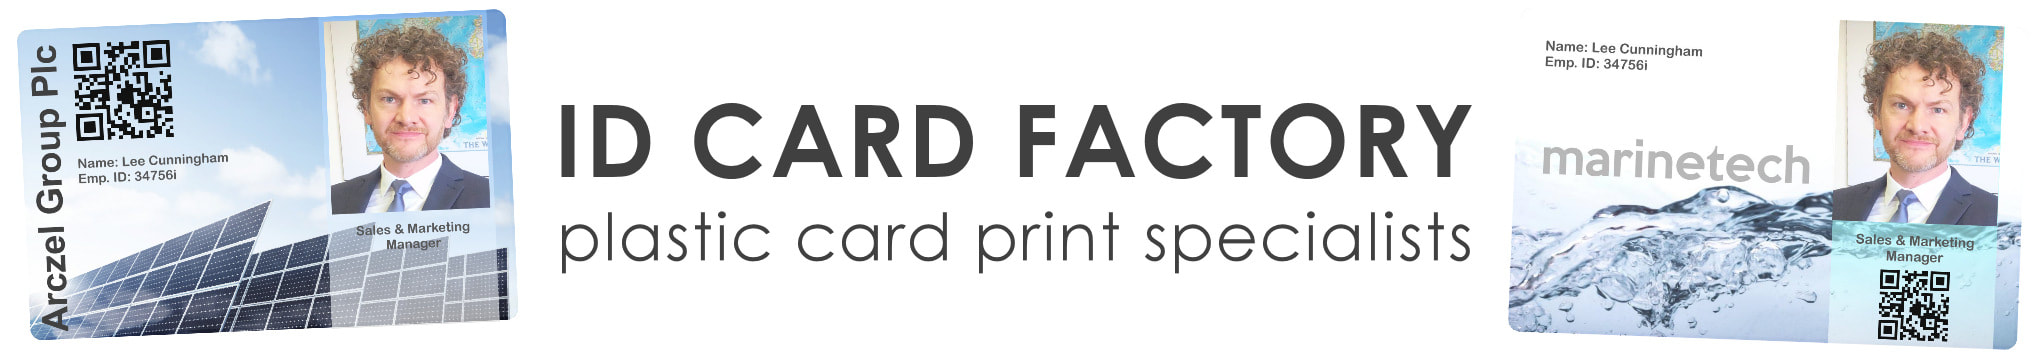 Hastings ID card printing | staff photo ID cards | company employee ID card print service | Local Identity Card Printing | Custom Design 